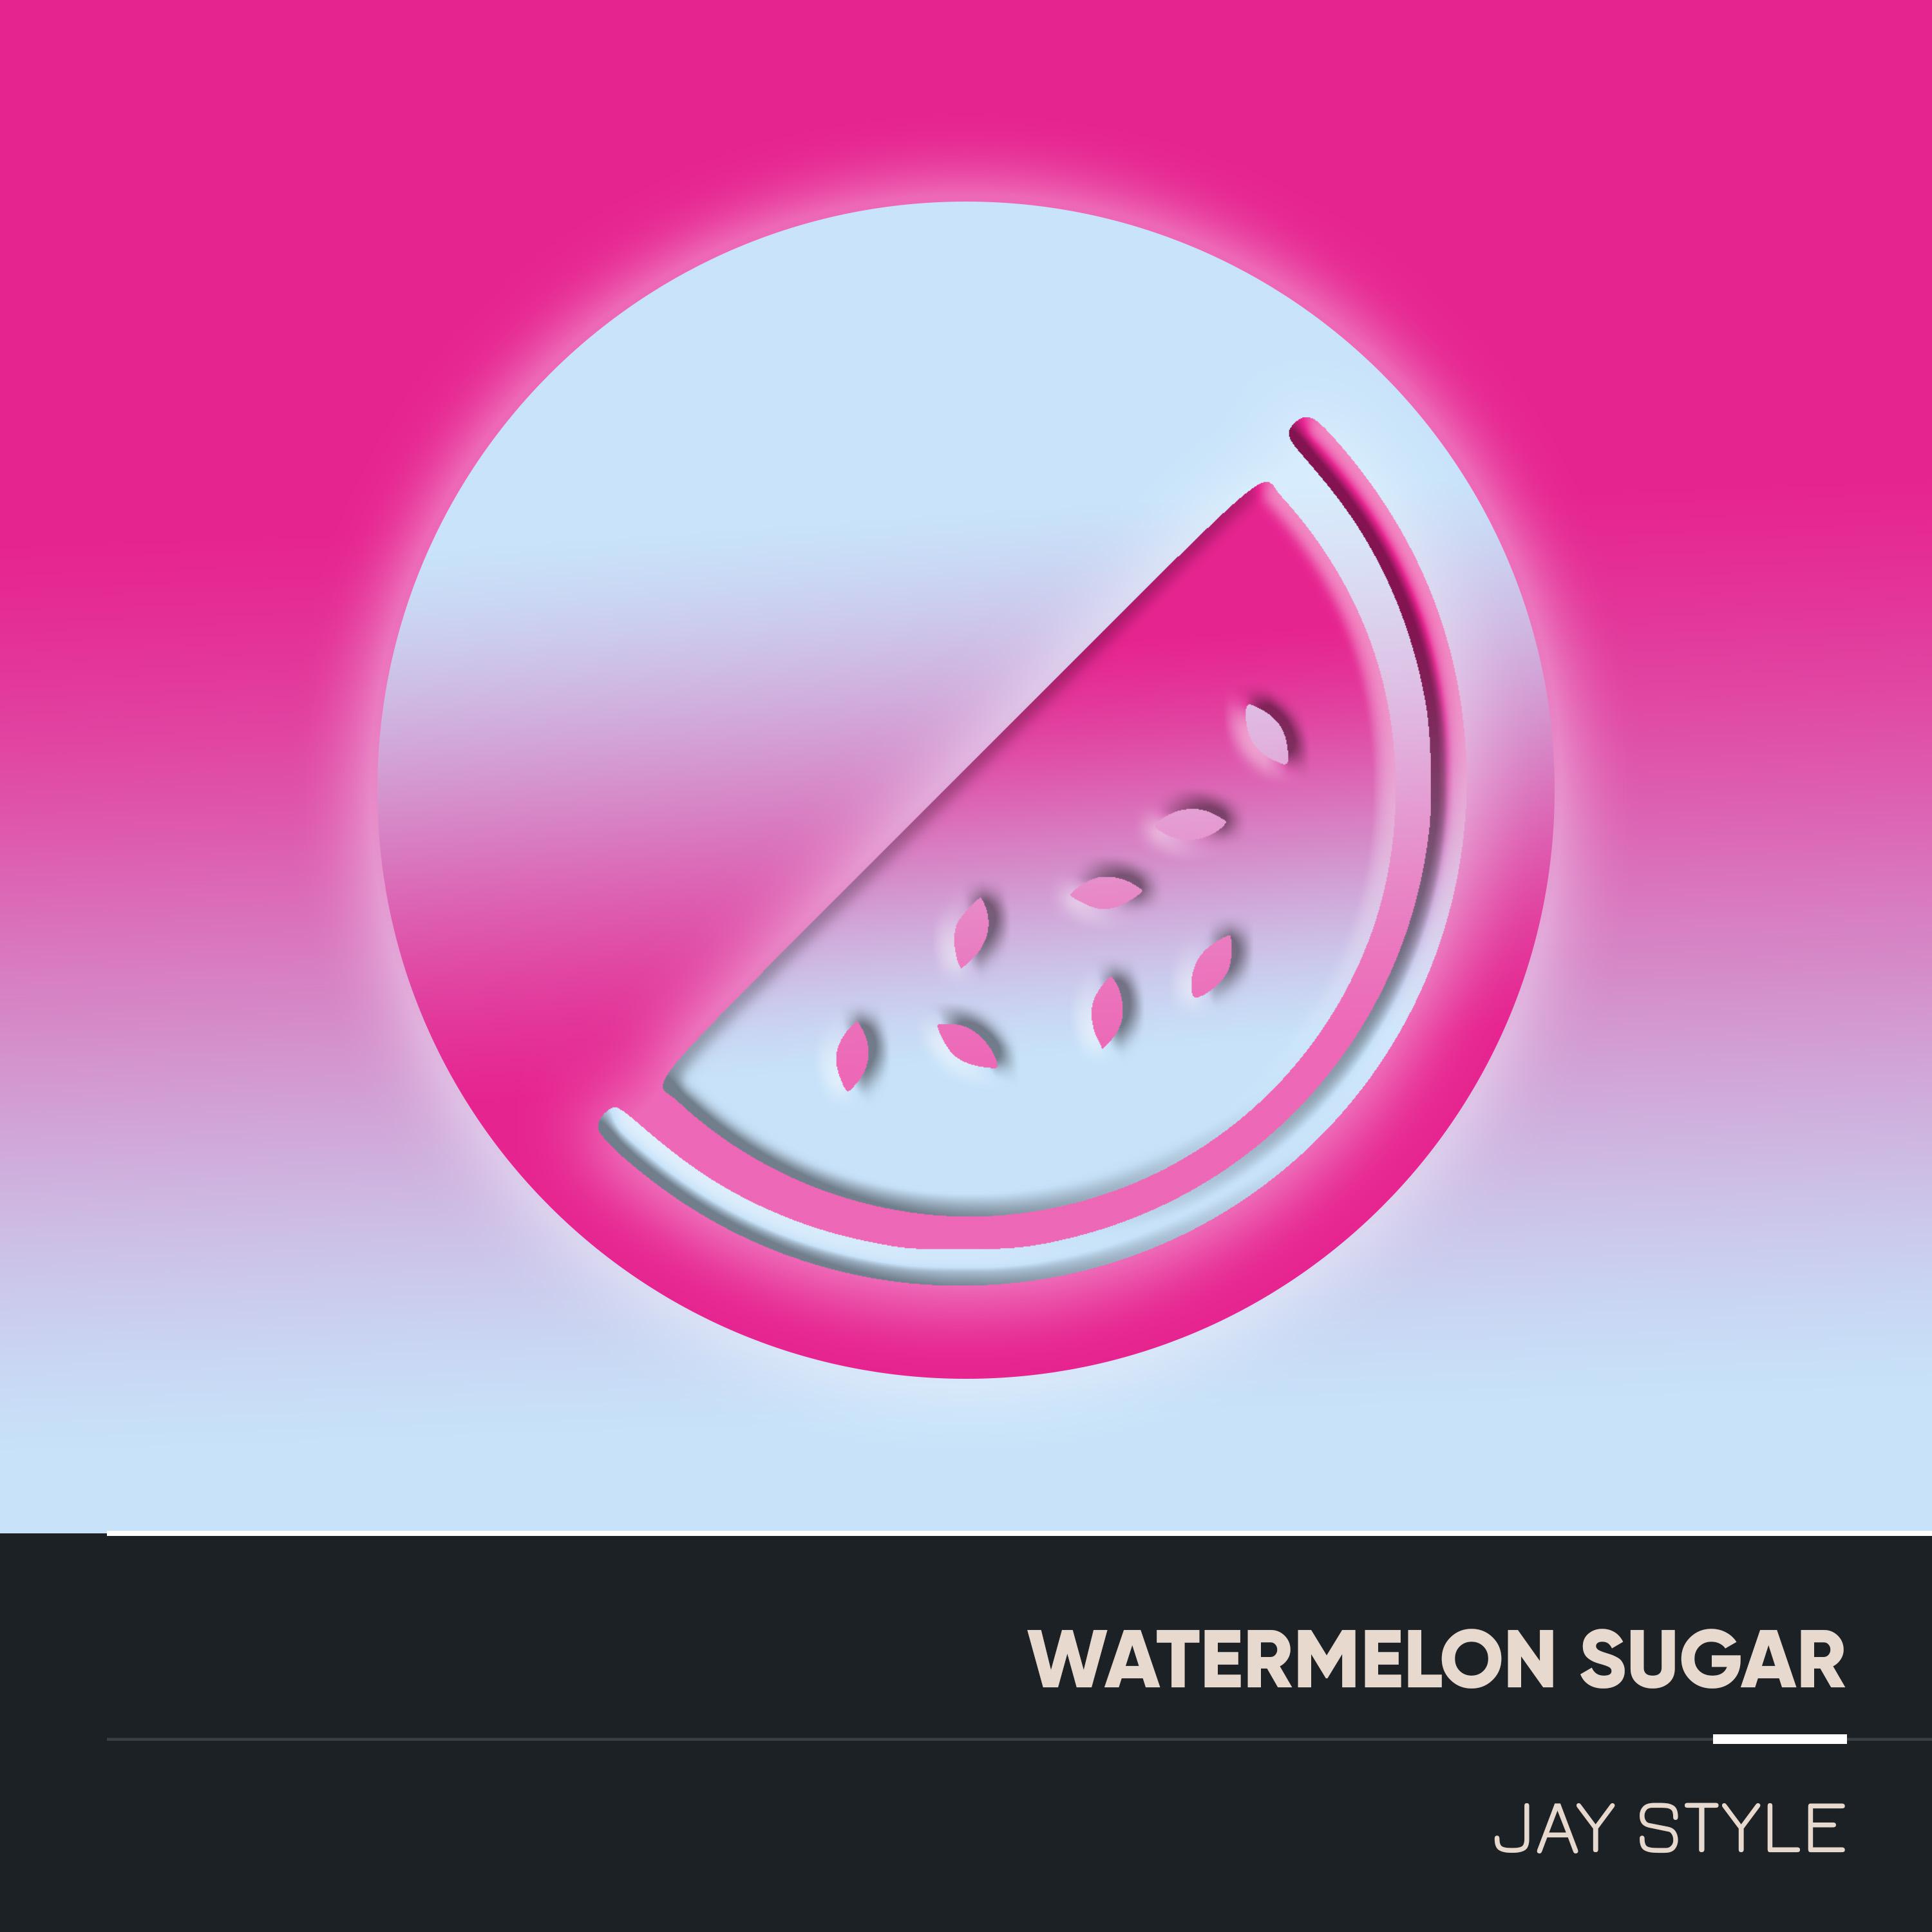 Jay Style - Watermelon Sugar